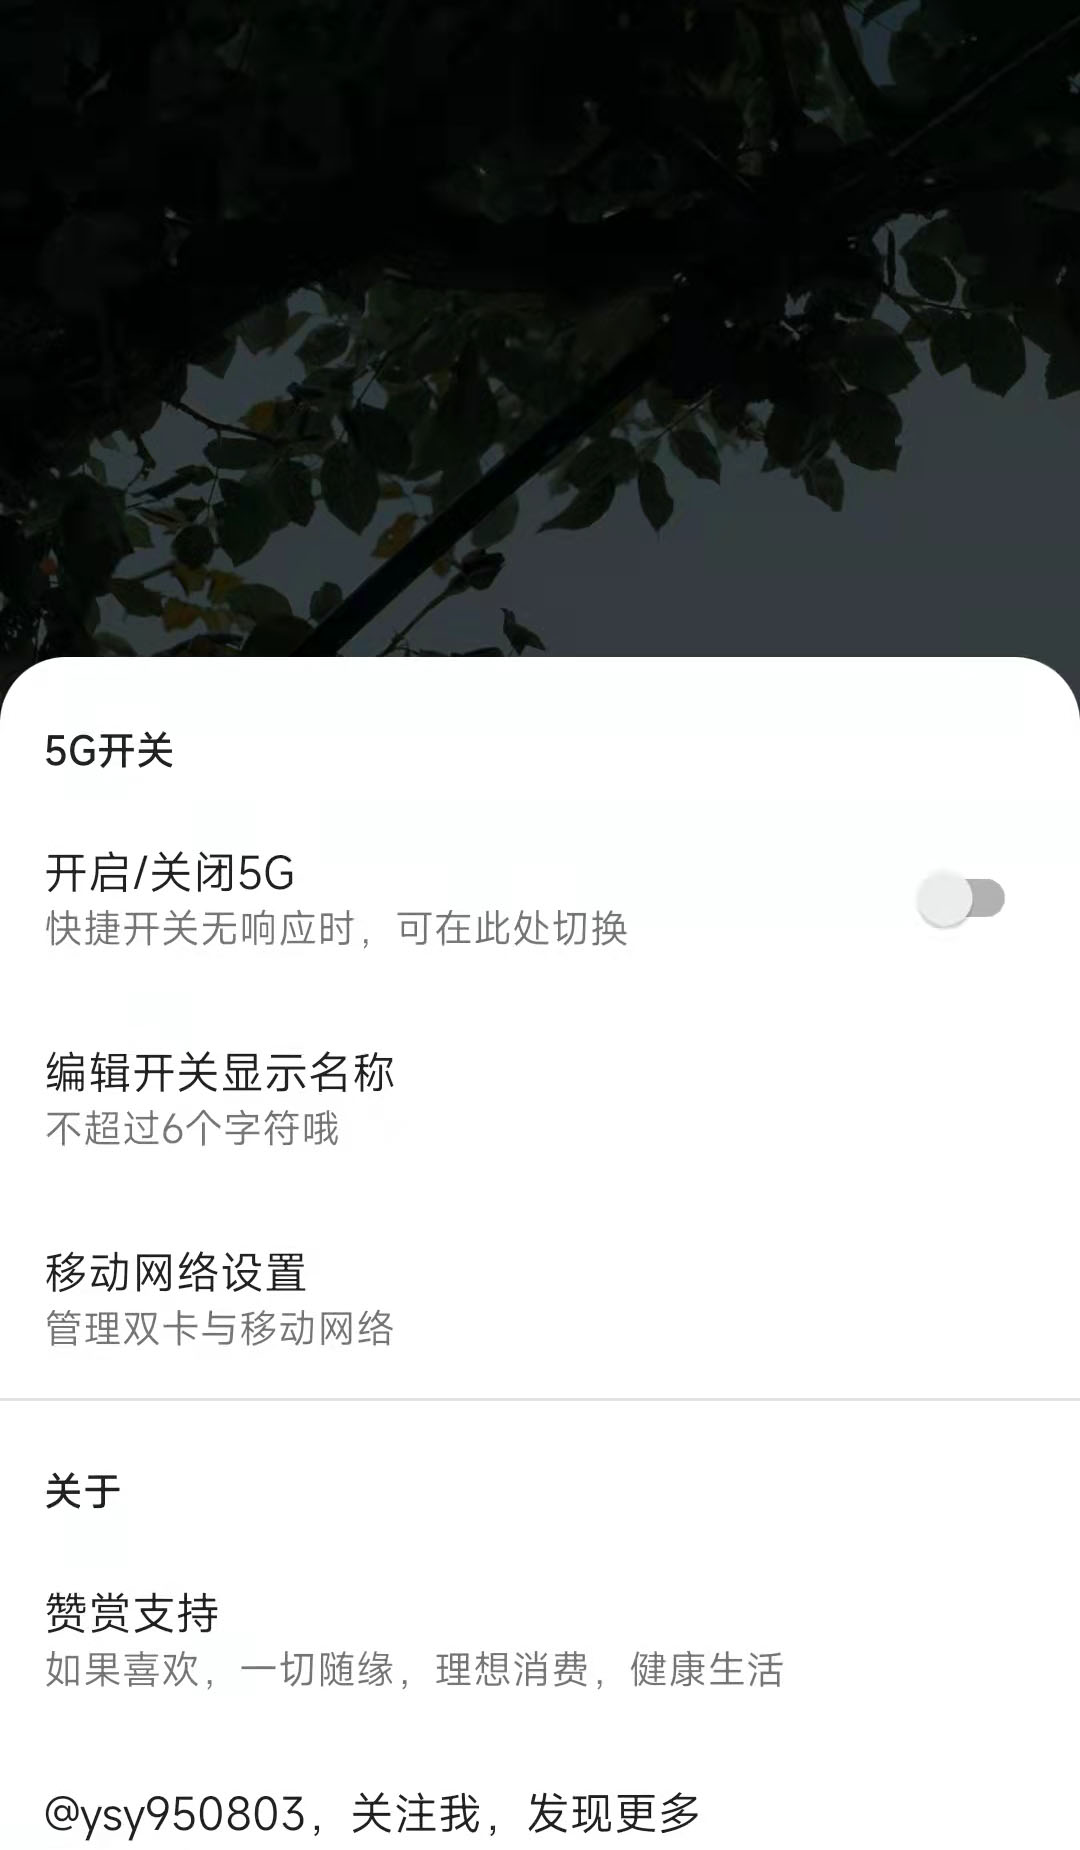 MIUI 5G开关西安开发app众包平台